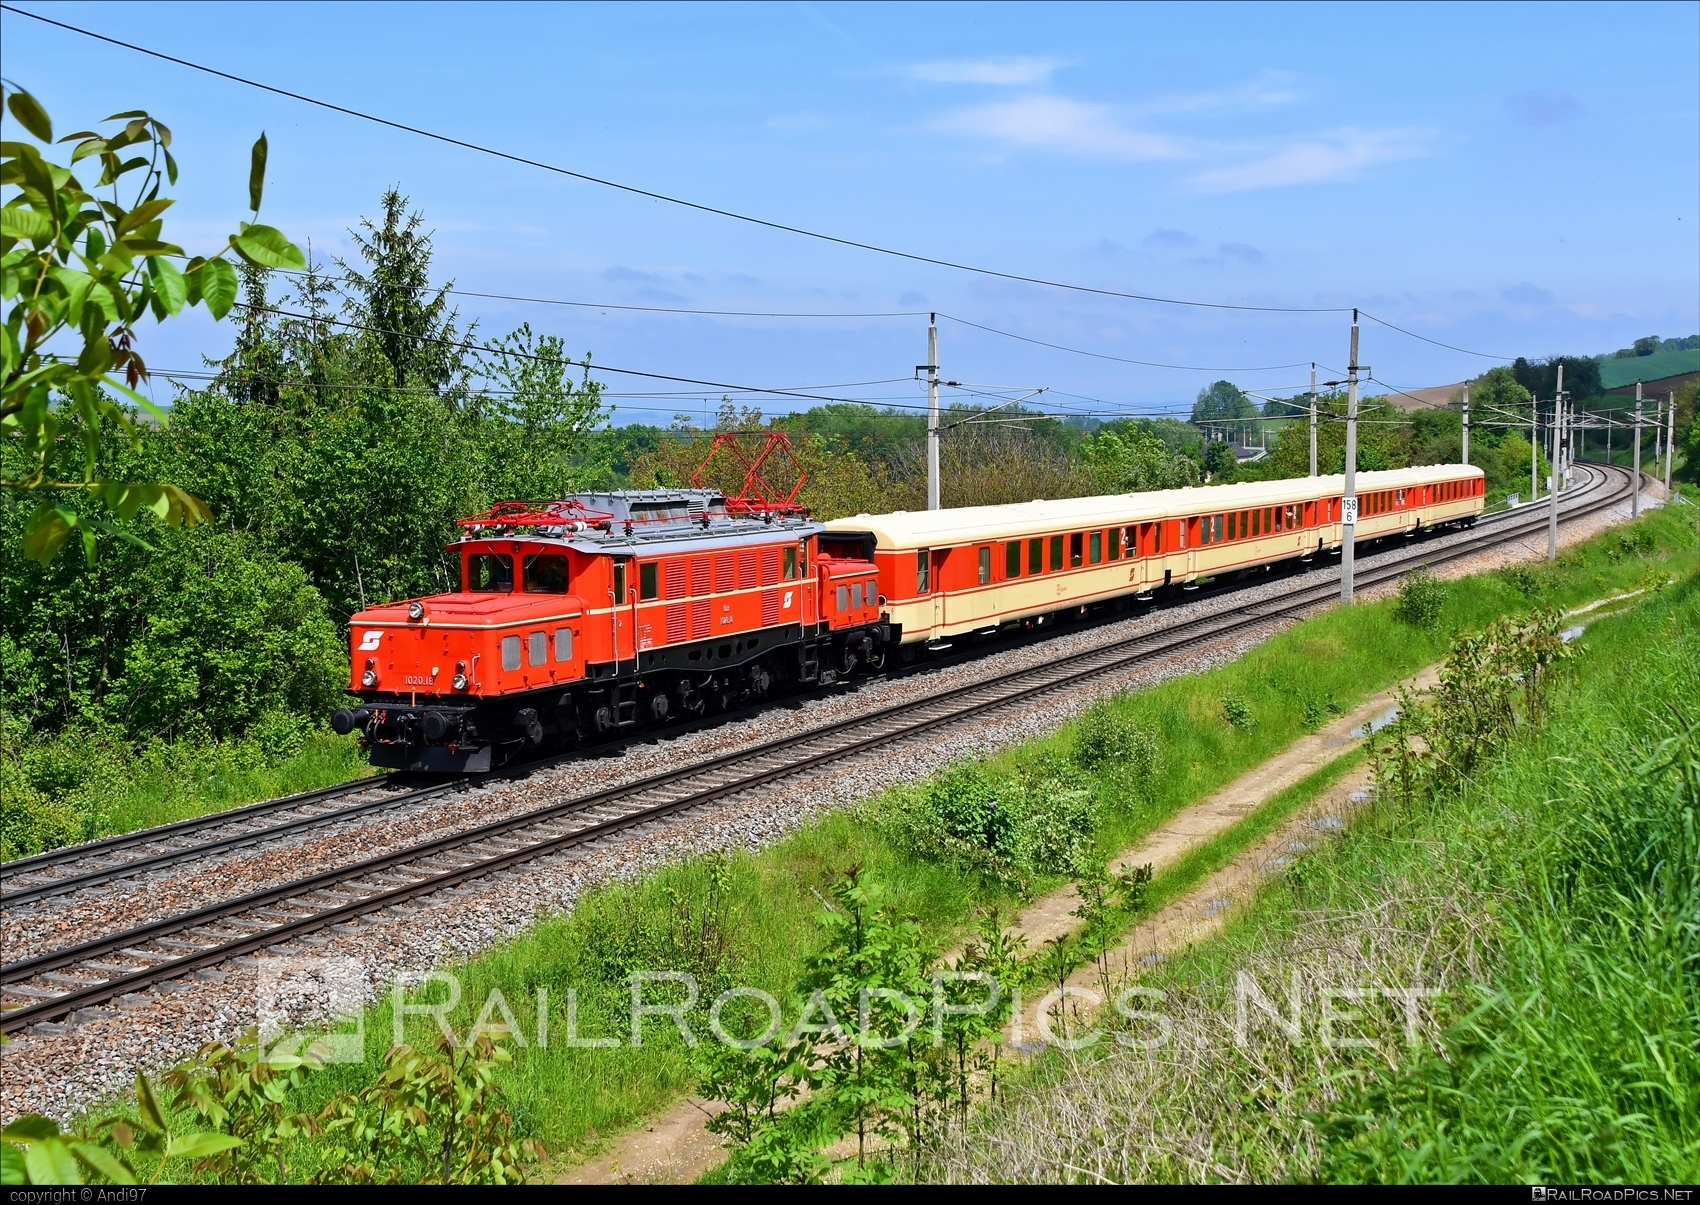 ÖBB Class 1020 - 1020 018 operated by Verein der Eisenbahnfreunde in Lienz #deutschesKrokodil #ebfl #krokodil #obbClass1020